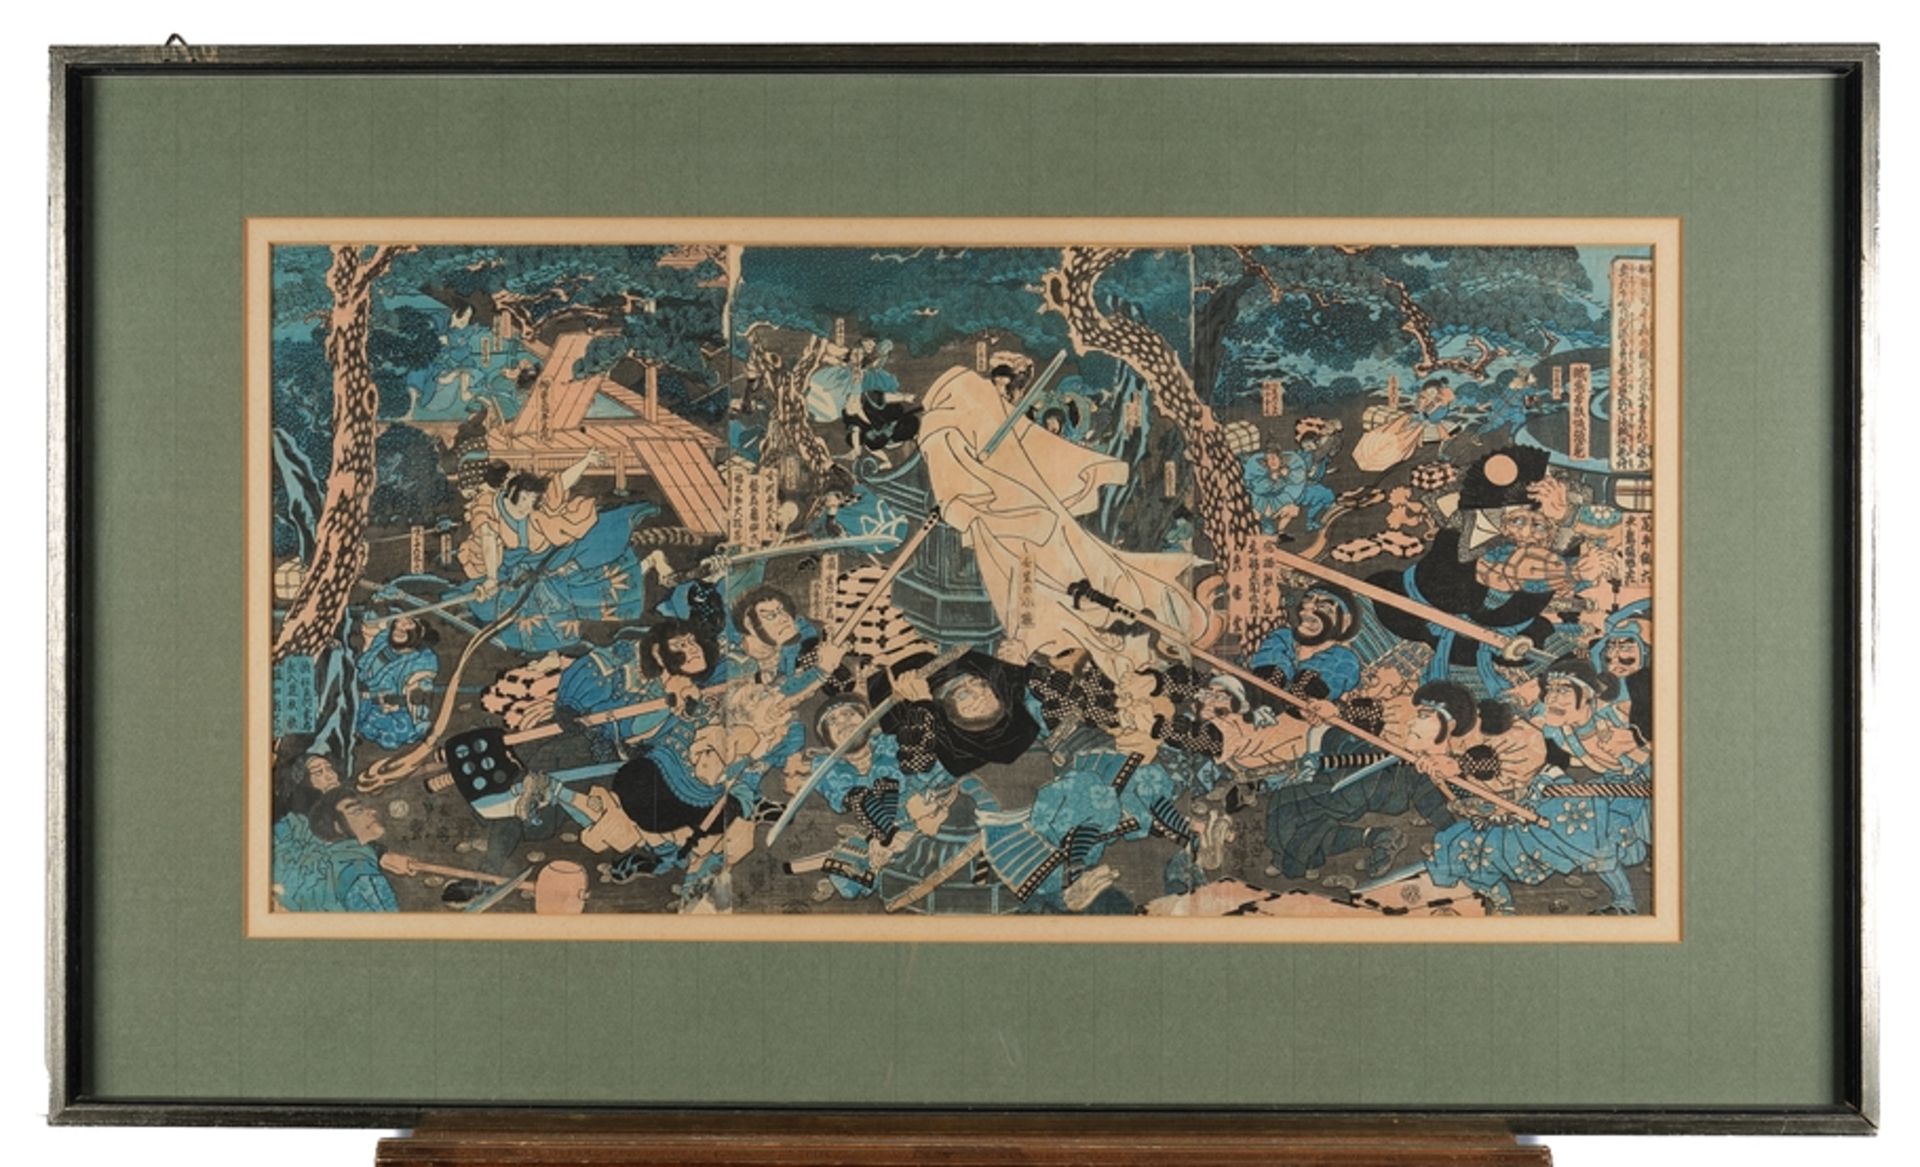 Colour woodcut, , "Battle scene", Japan, 19th century, triptych, probably Utagawa Yoshitora (active - Image 2 of 3